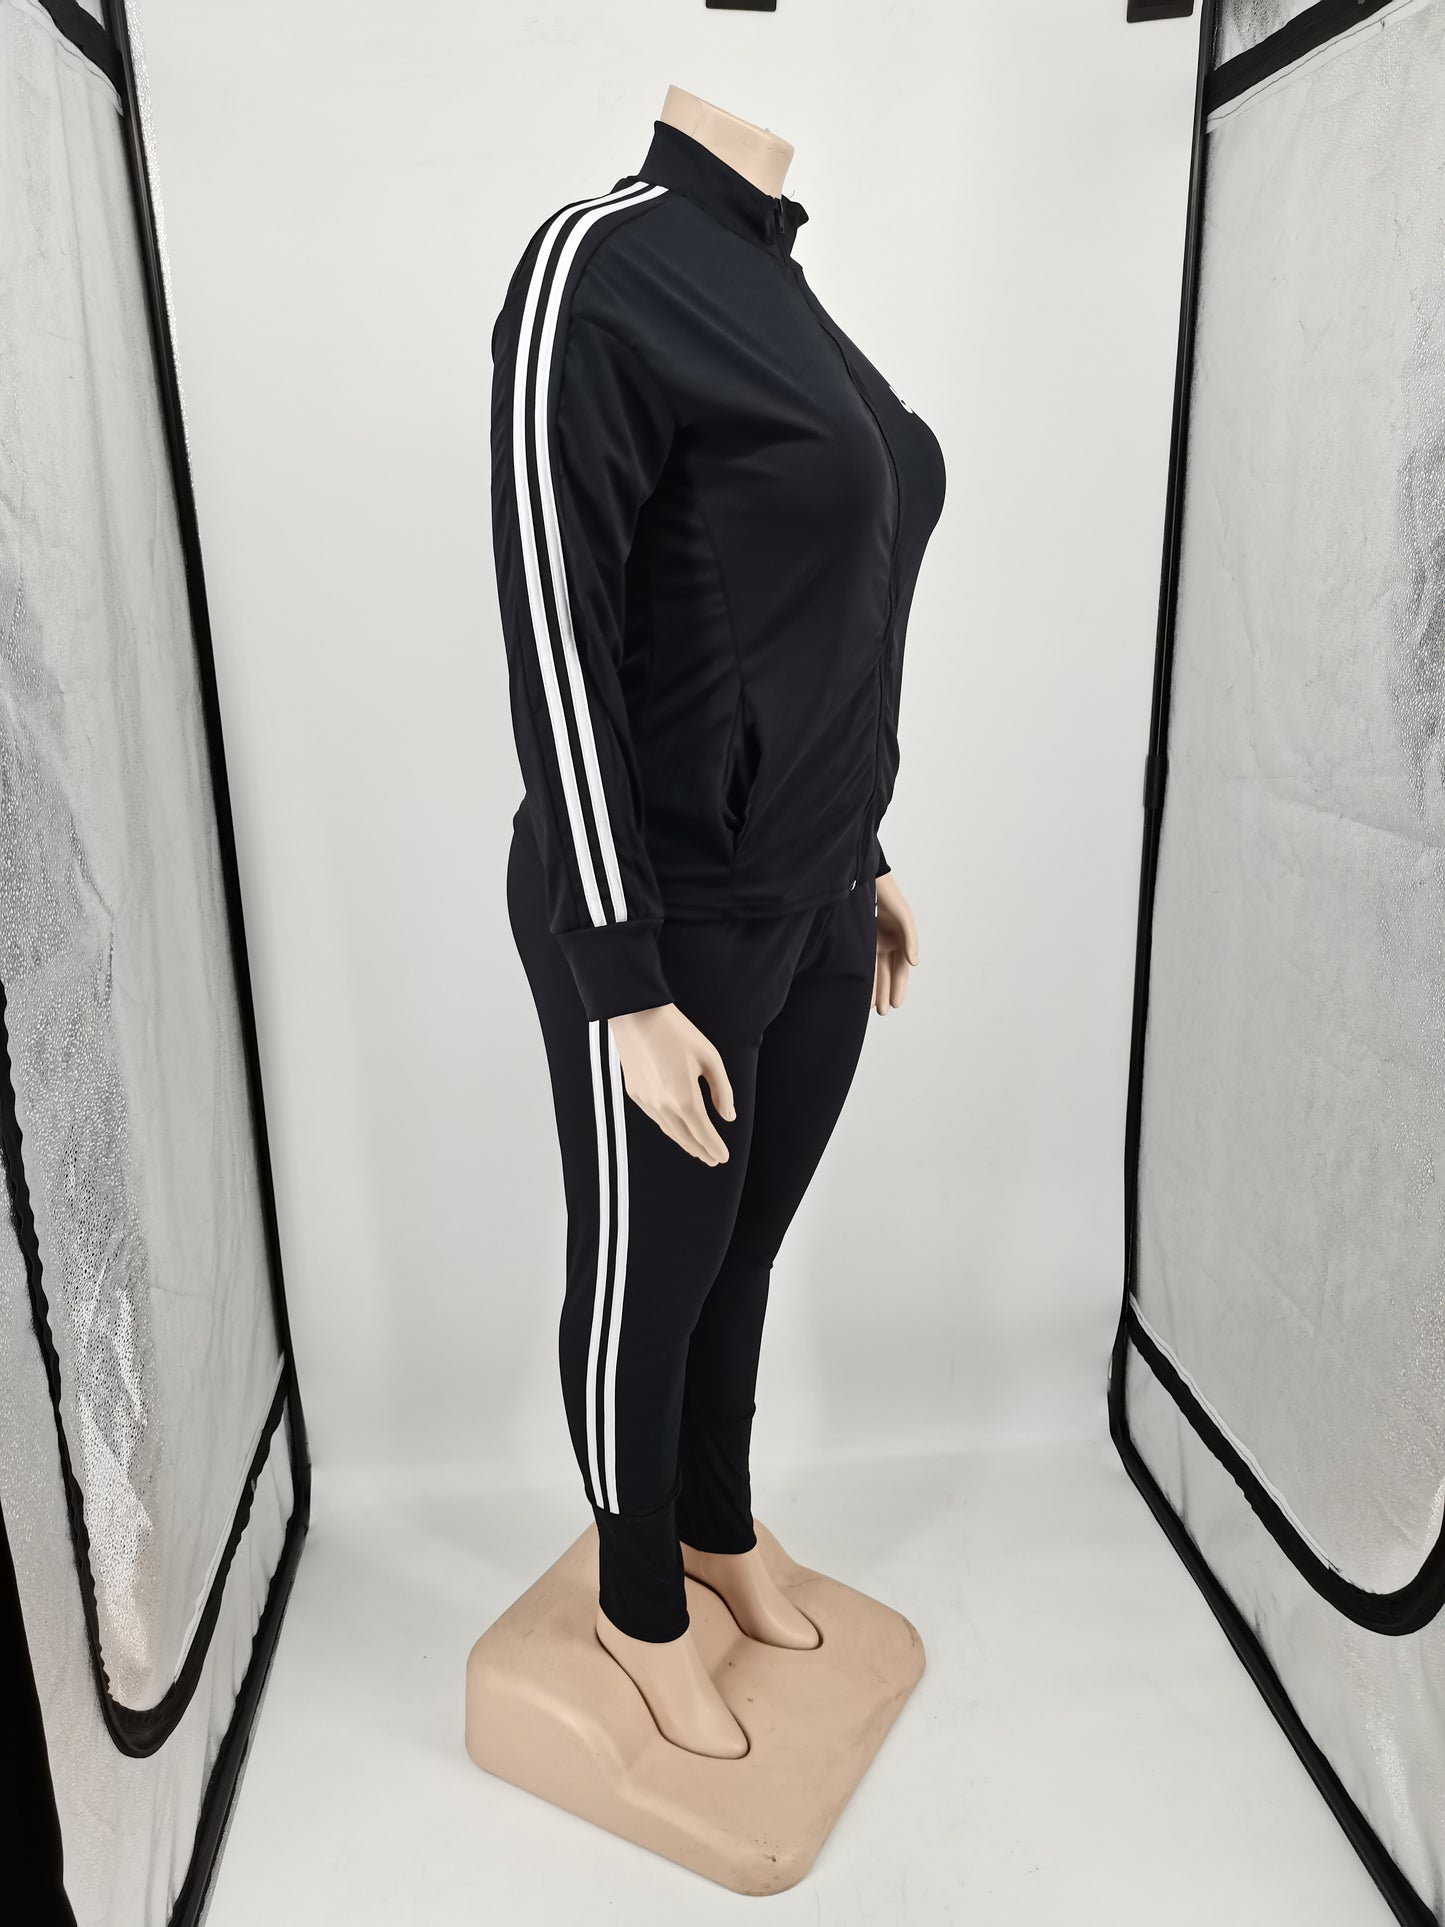 BamBam Women's Sportswear Slim Fashion Casual Jogging Two-Piece Pants Set - BamBam